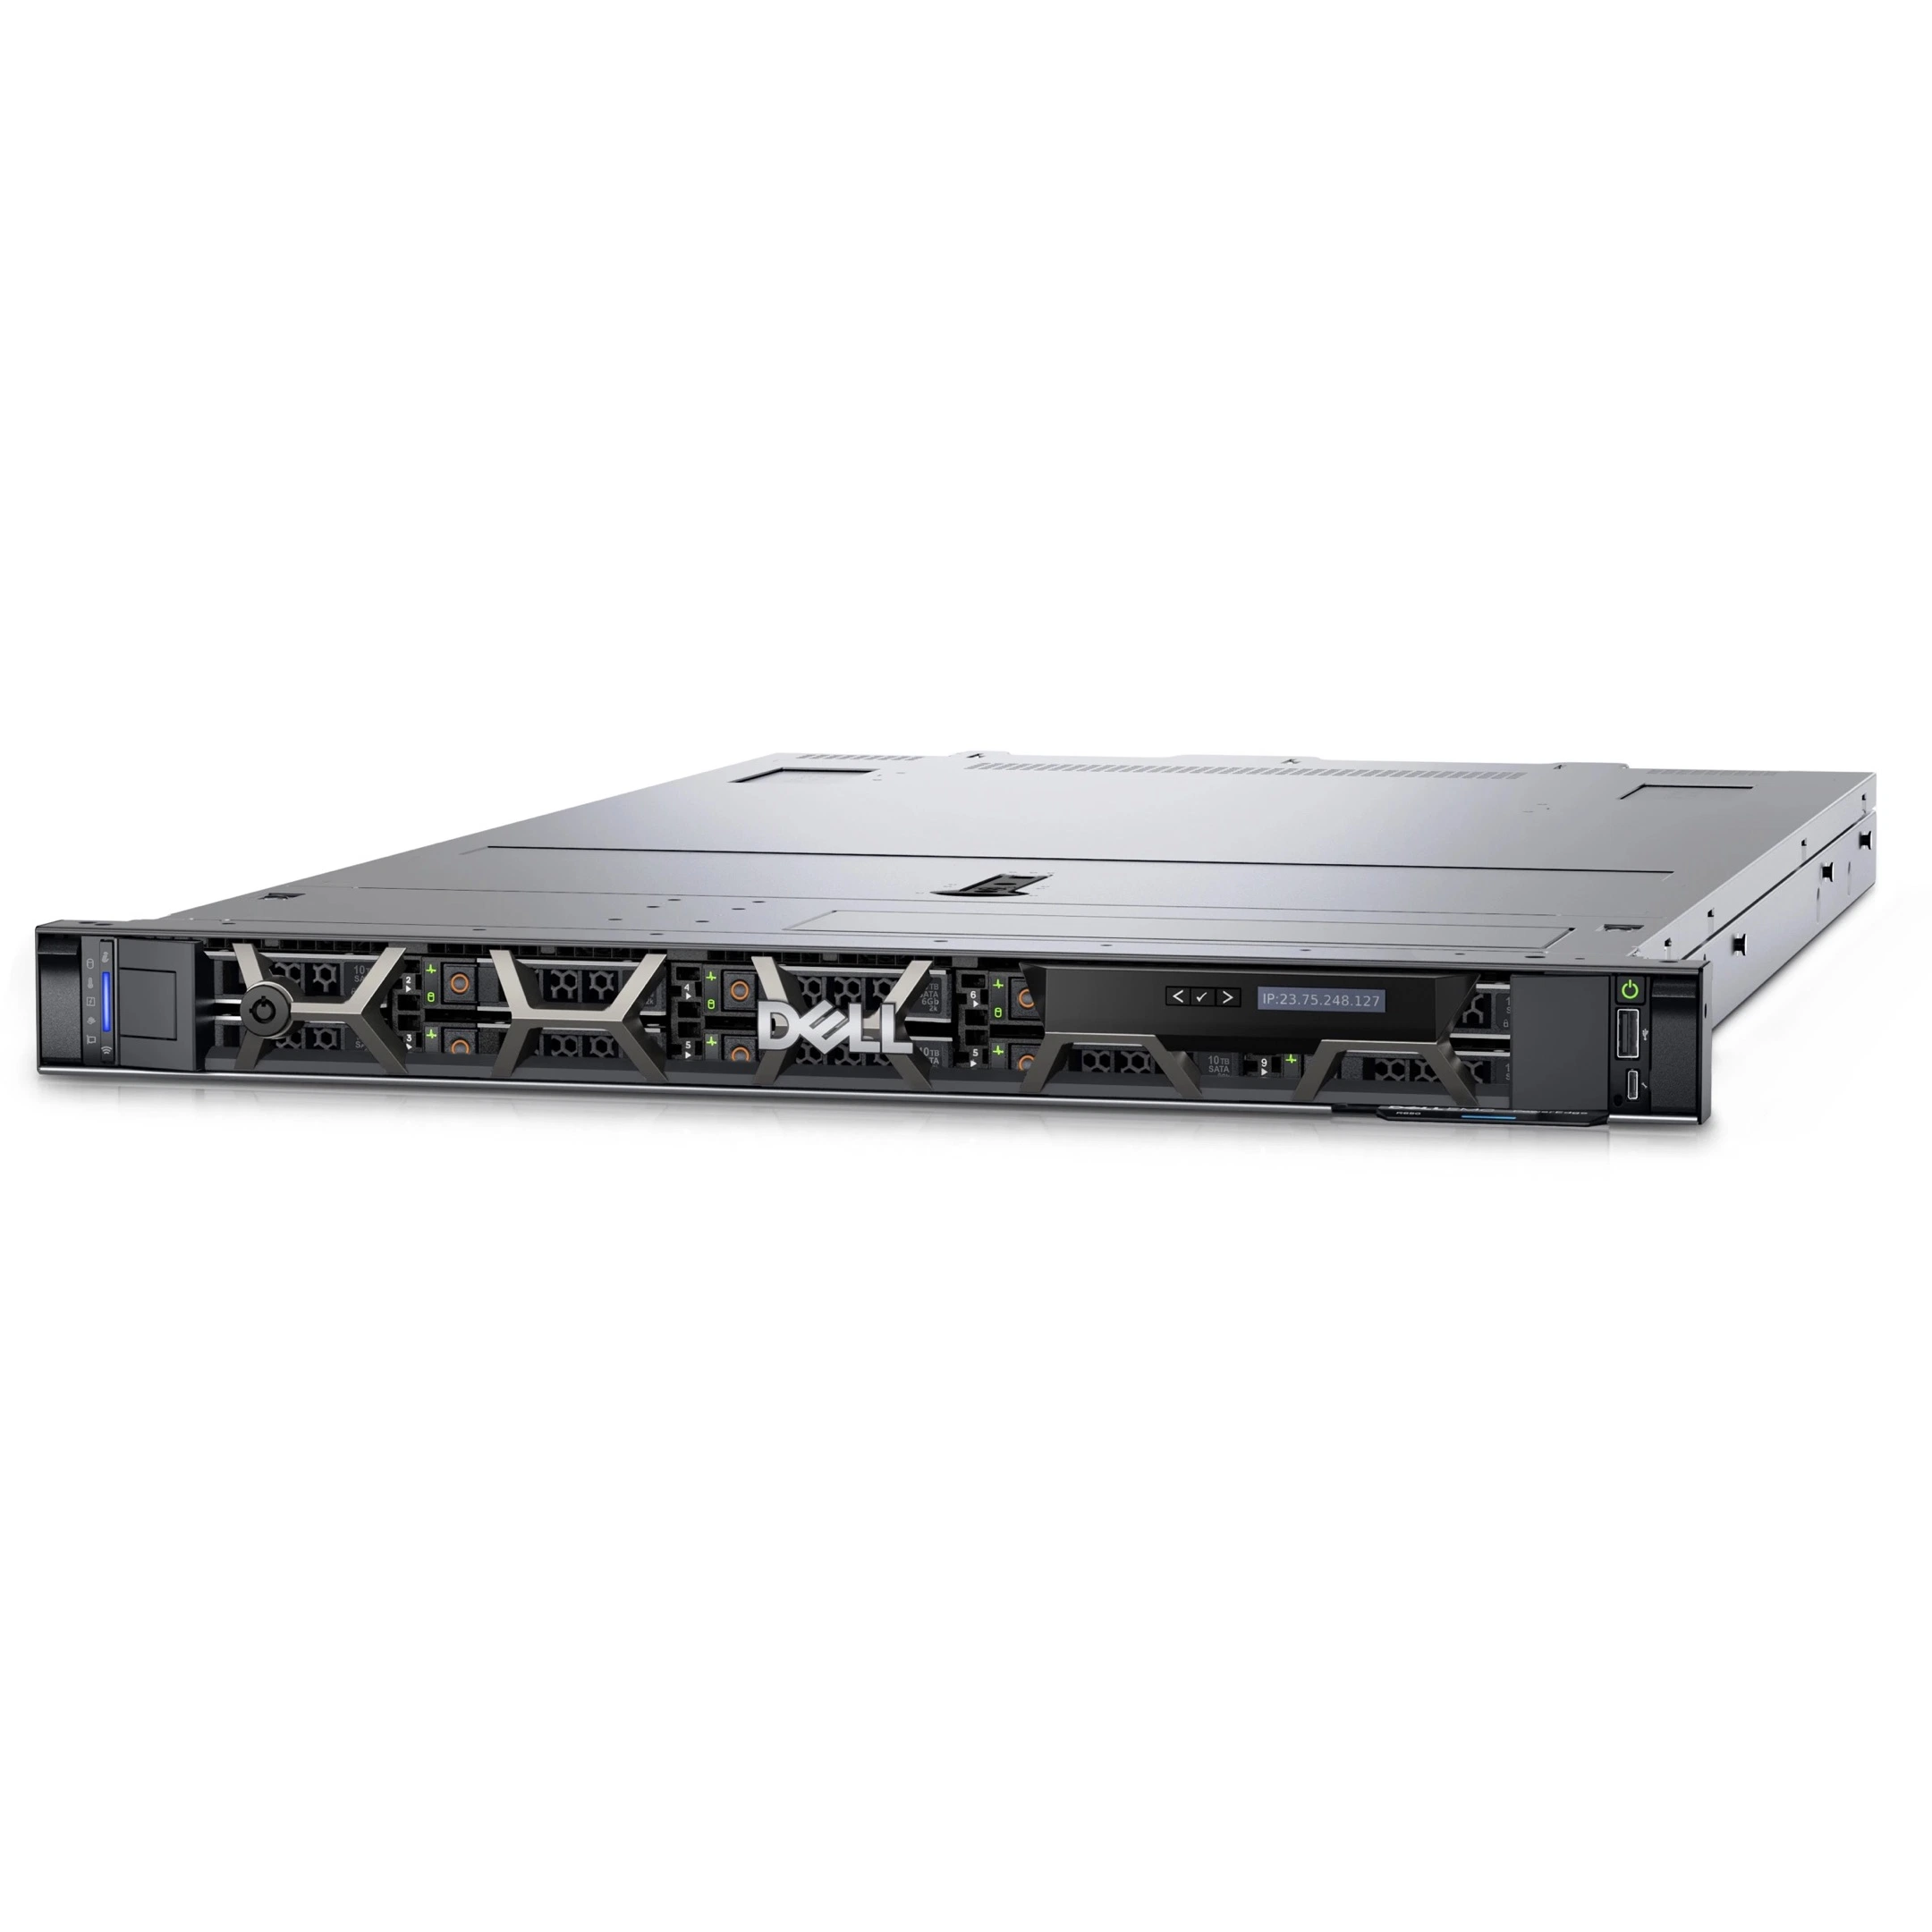 Equipo servidor De-Ll De-Ll el almacenamiento de vídeo servidor R550